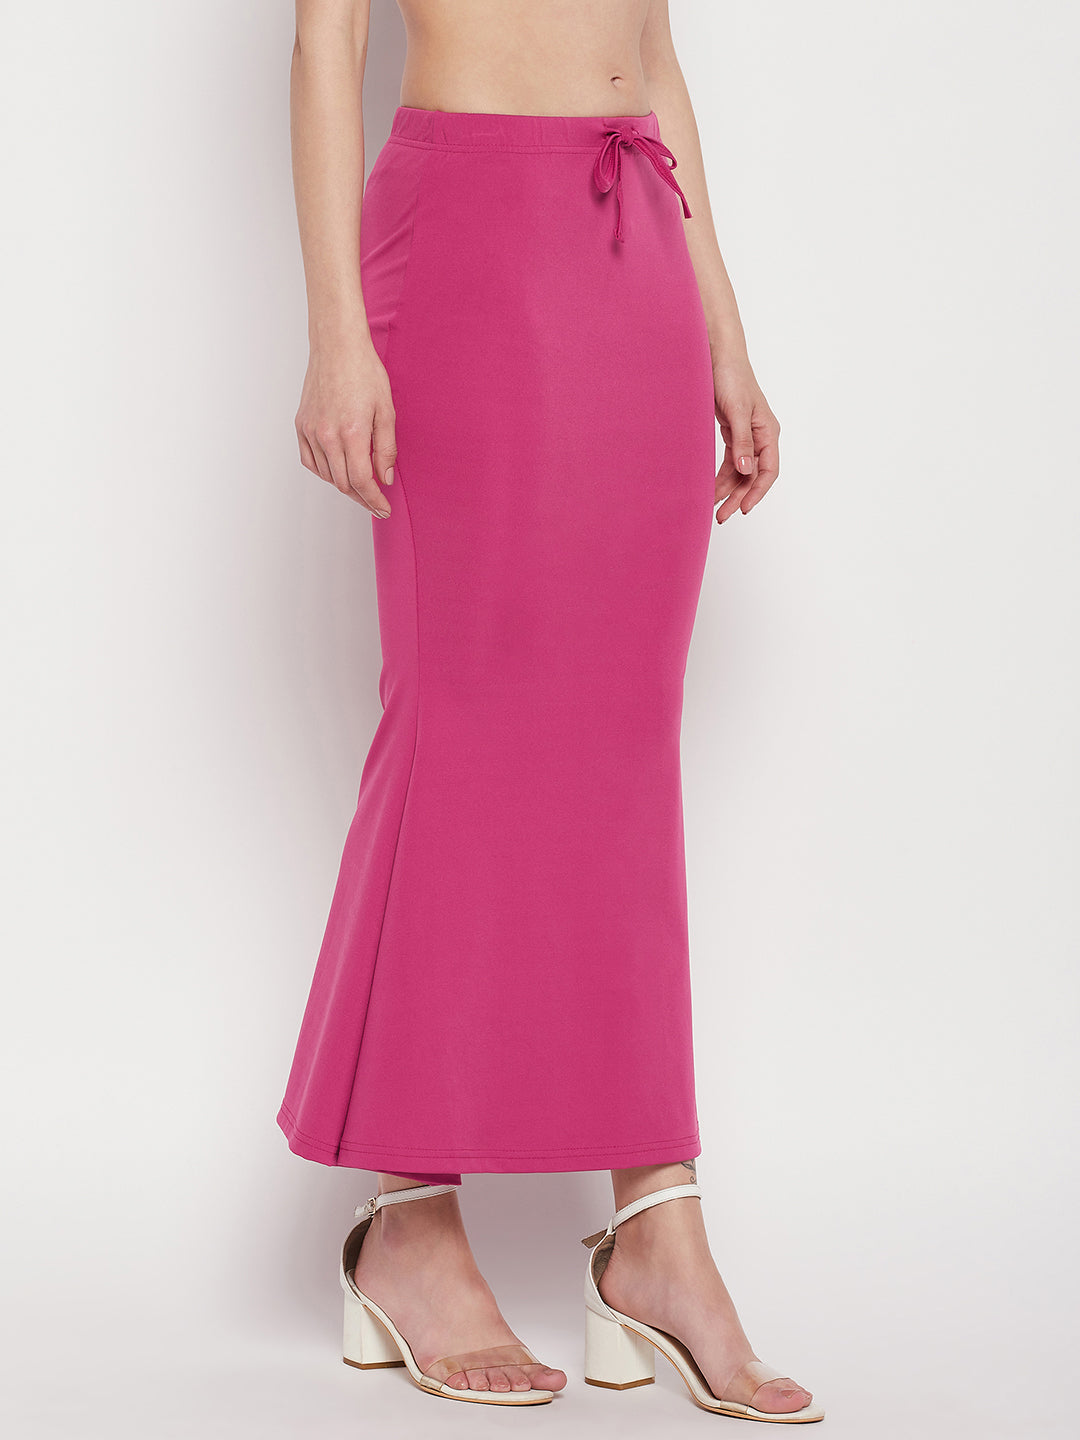 vaitan Saree Petticoat Shapewear 2Pc Combo Skin Pink Lycra Blend Petticoat  Price in India - Buy vaitan Saree Petticoat Shapewear 2Pc Combo Skin Pink  Lycra Blend Petticoat online at